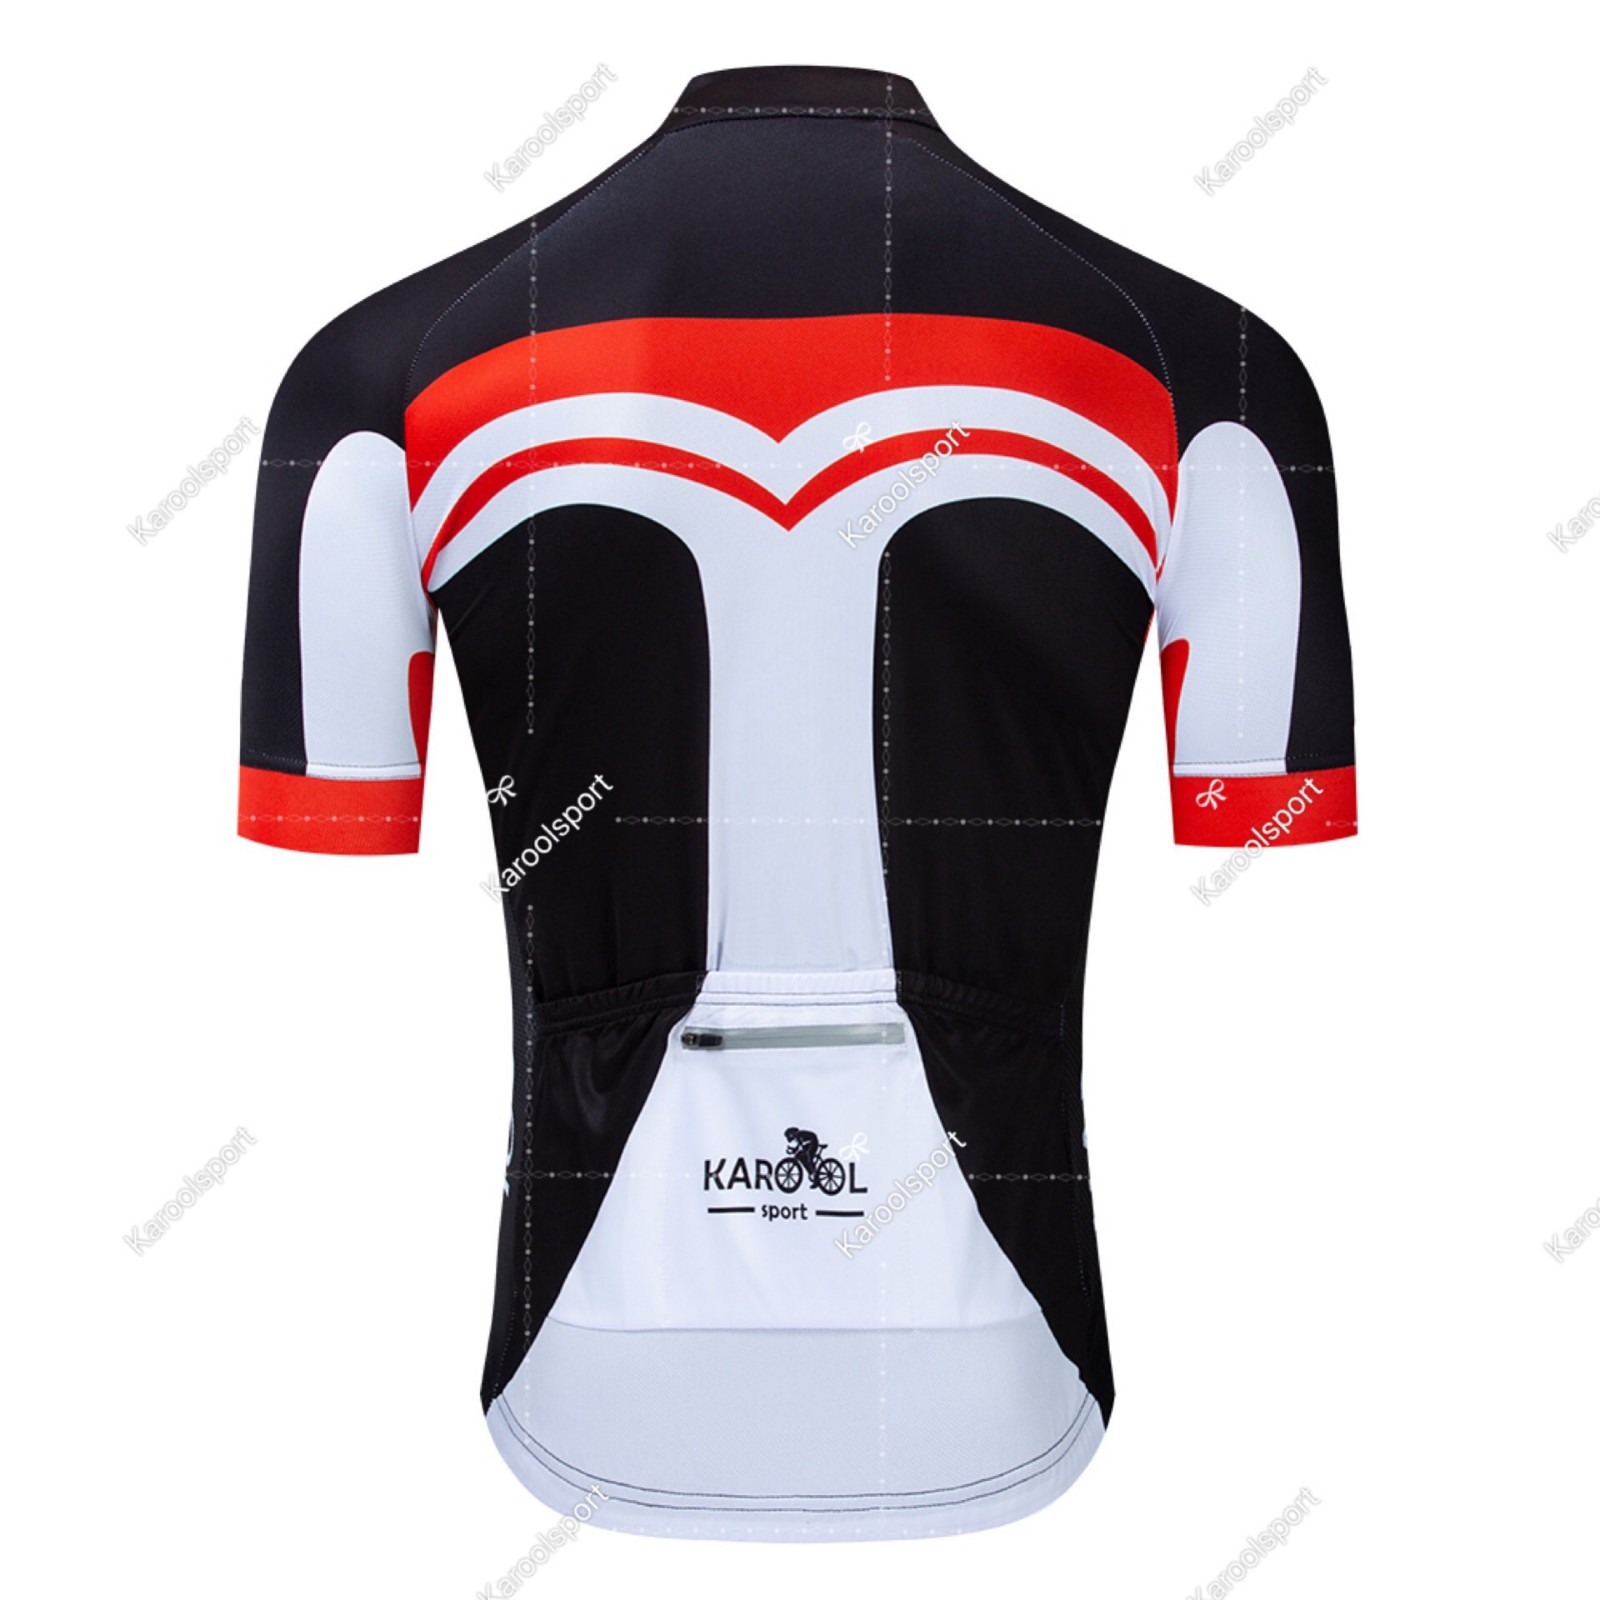 Karool custom bike jerseys supplier for women-3